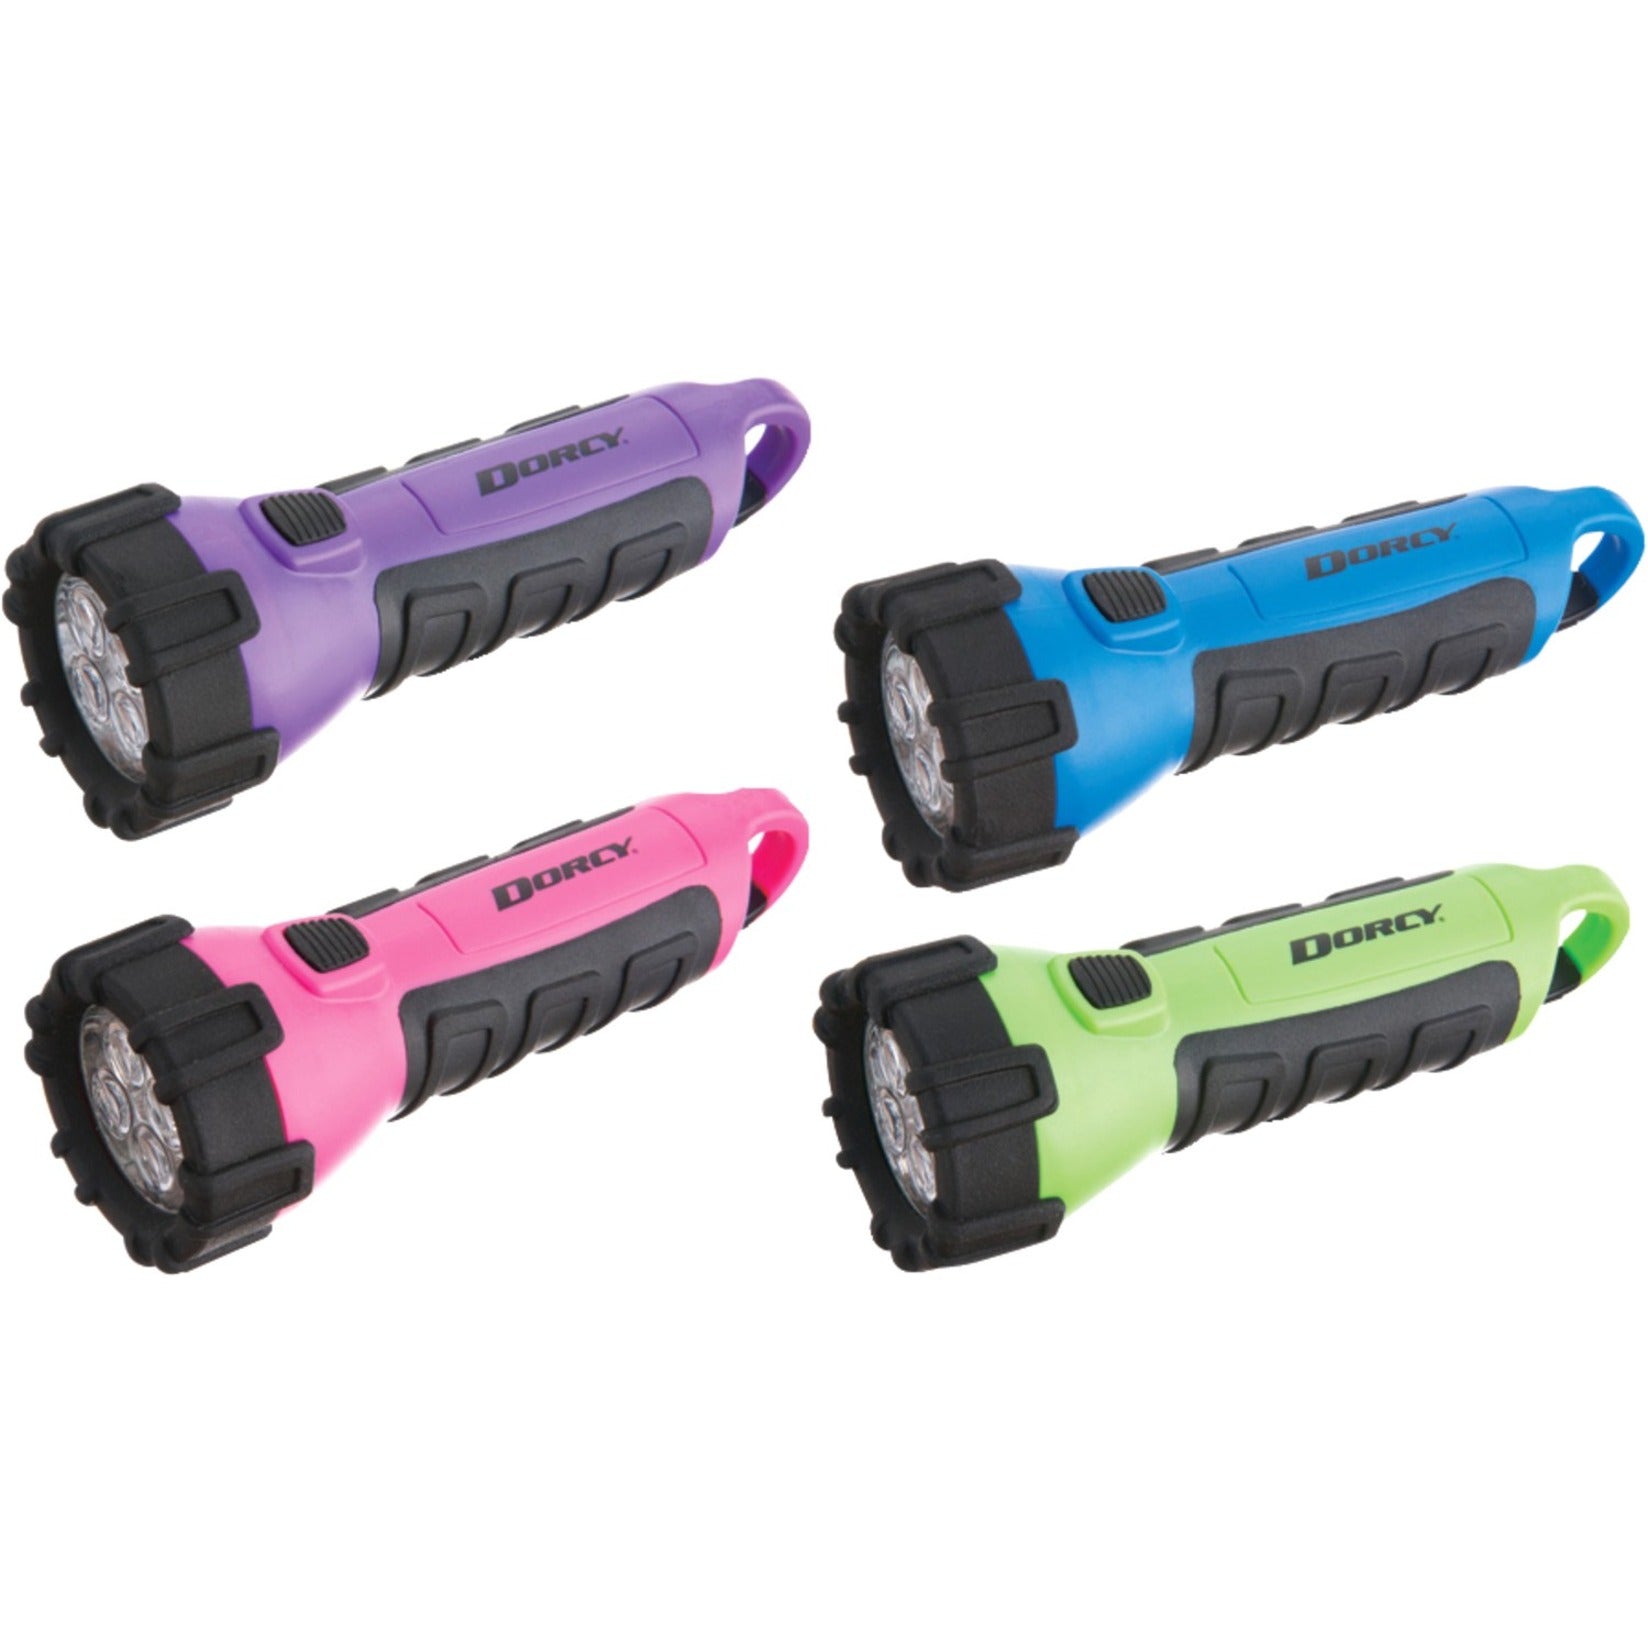 Dorcy 41-2511 Flashlight, 4-LED Floating, Shock Absorbing, Water Proof, Carabiner Clip, Super Bright